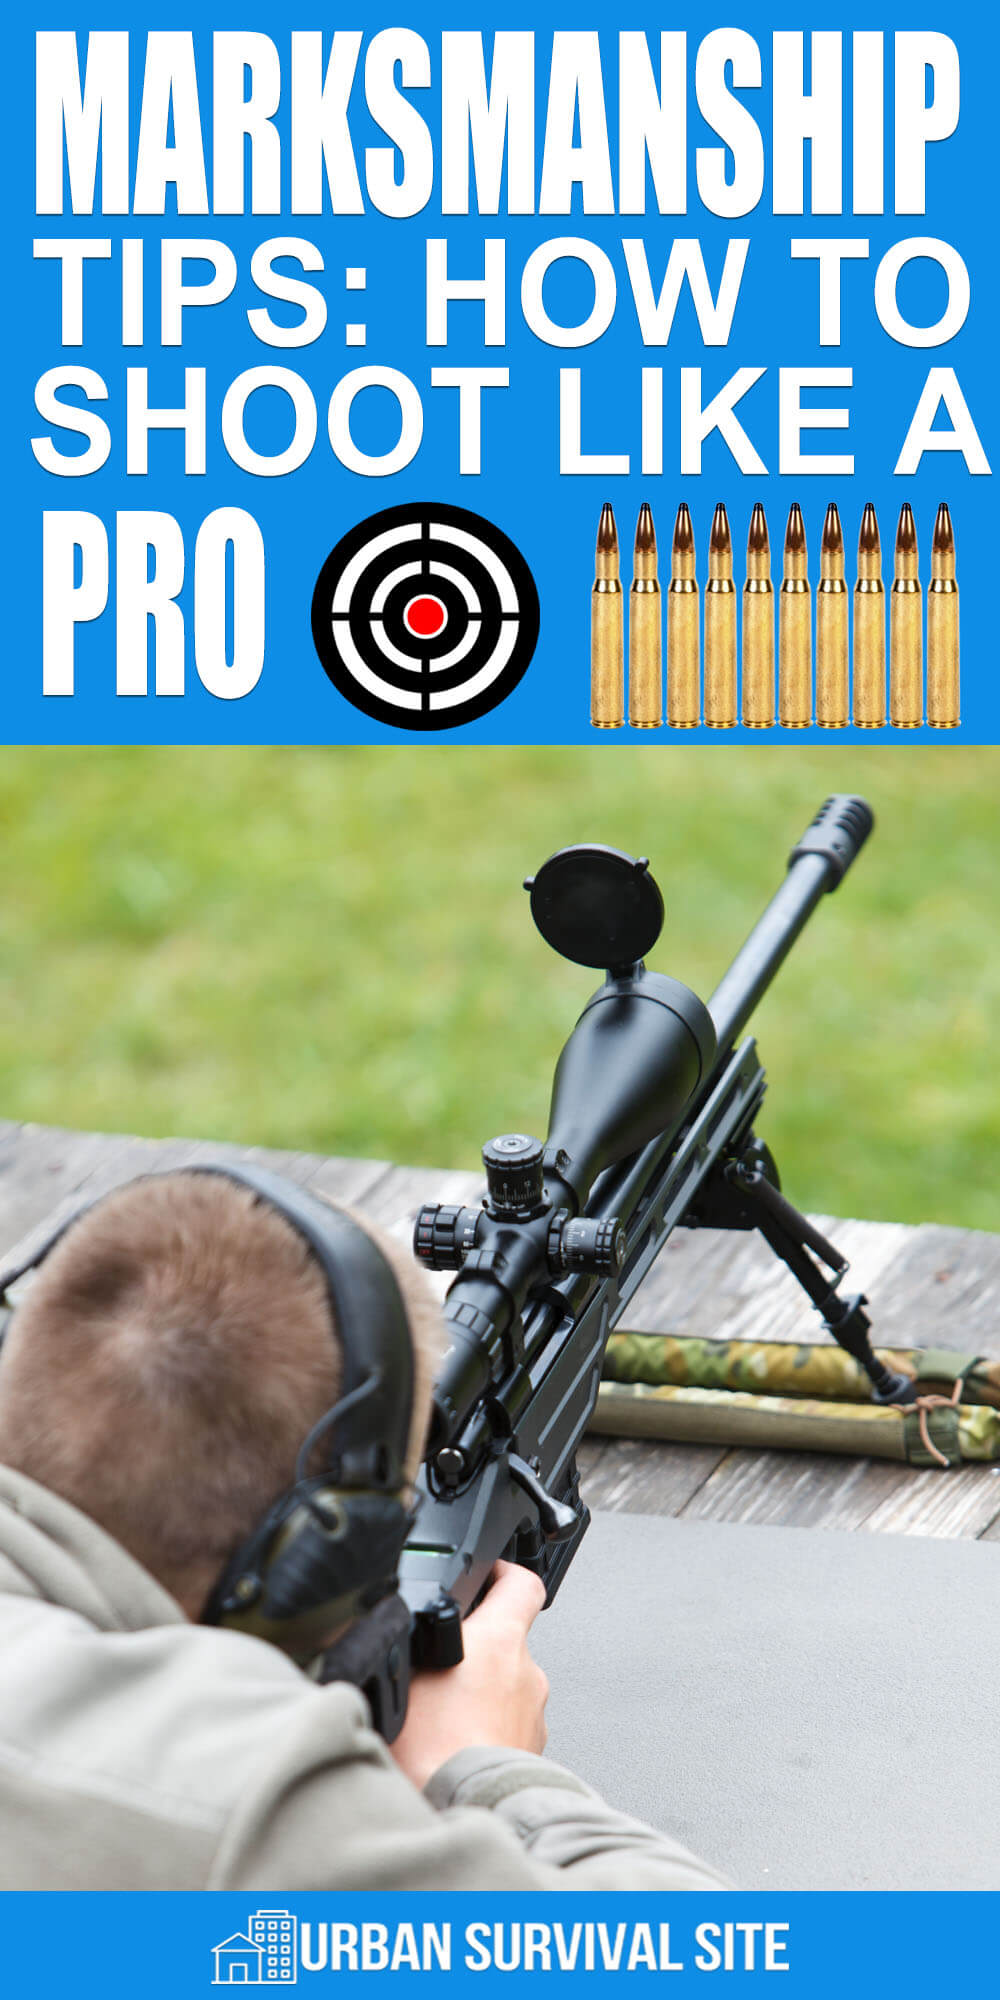 Marksmanship Tips: How To Shoot Like A Pro